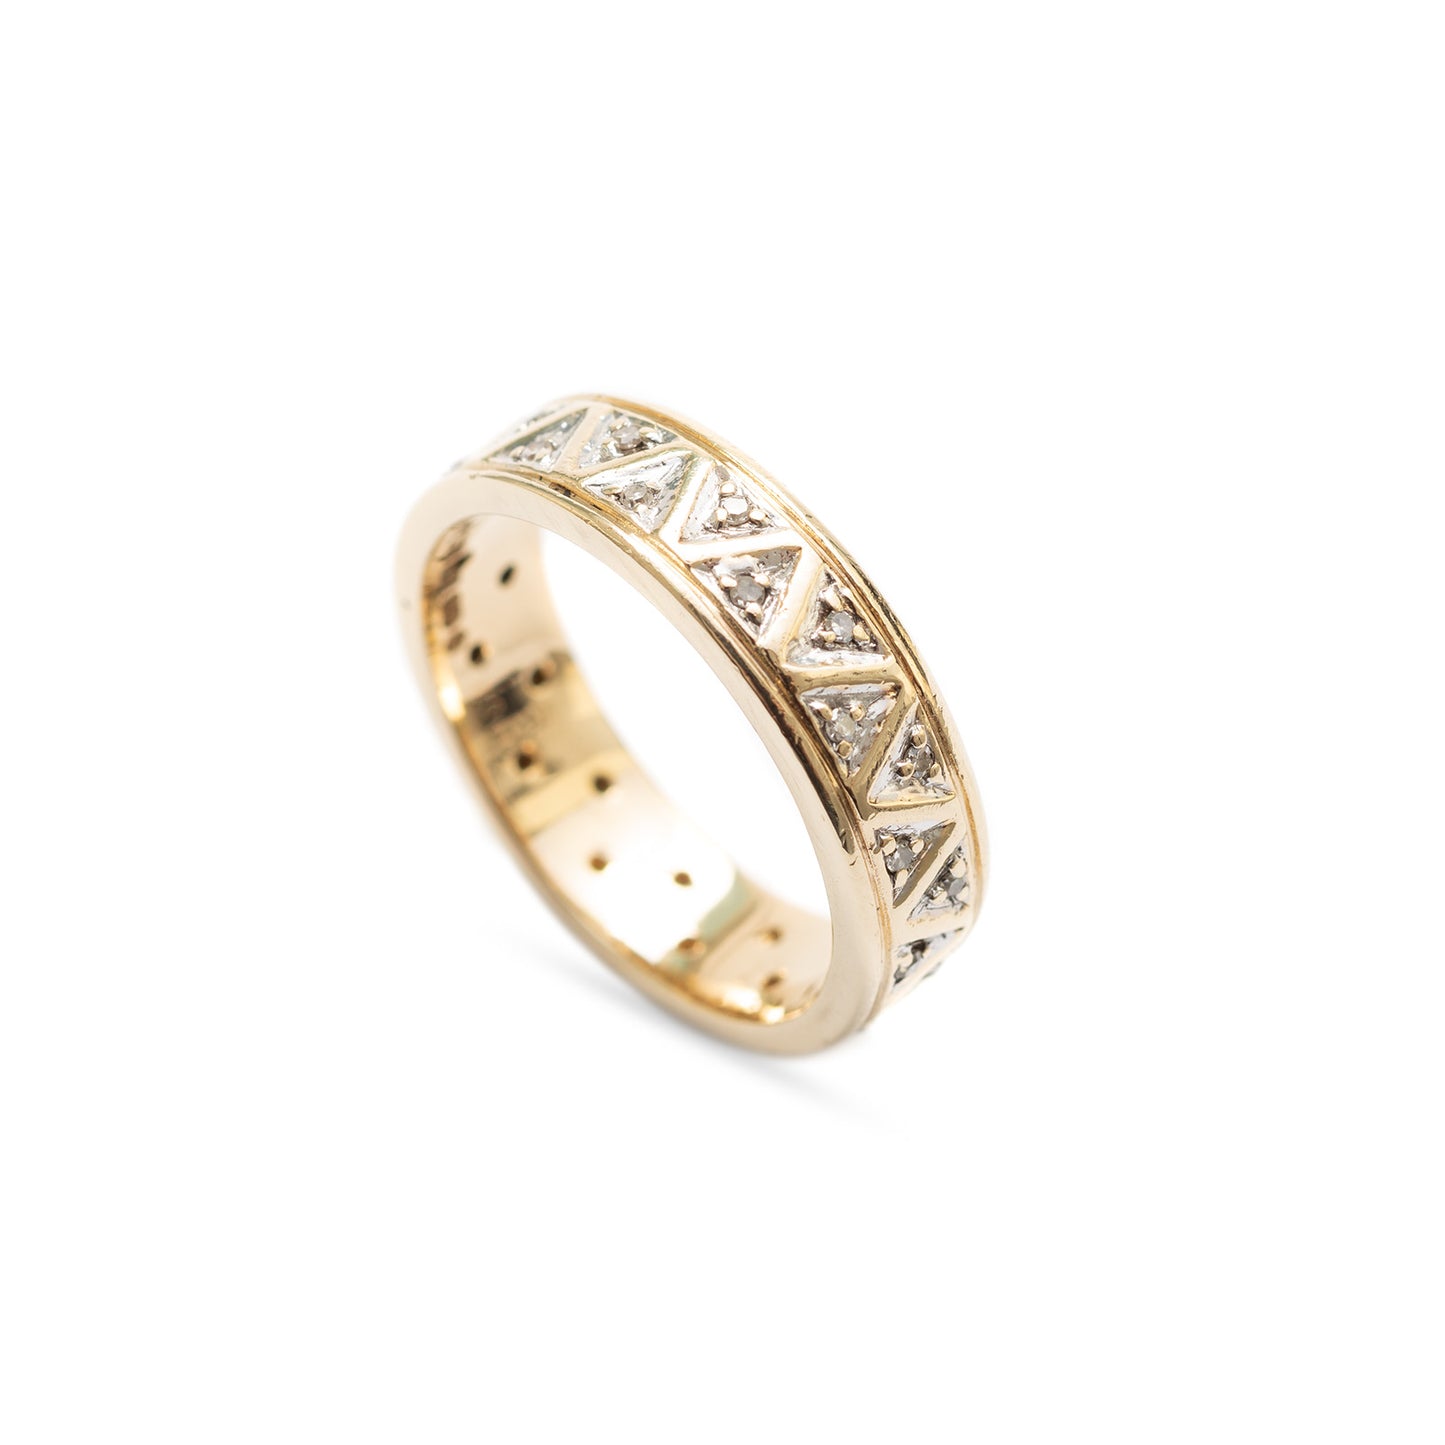 Vintage 9ct Gold Full Diamond Set Ladies Band Ring Sheffield Hallmark Size N (Code A320)